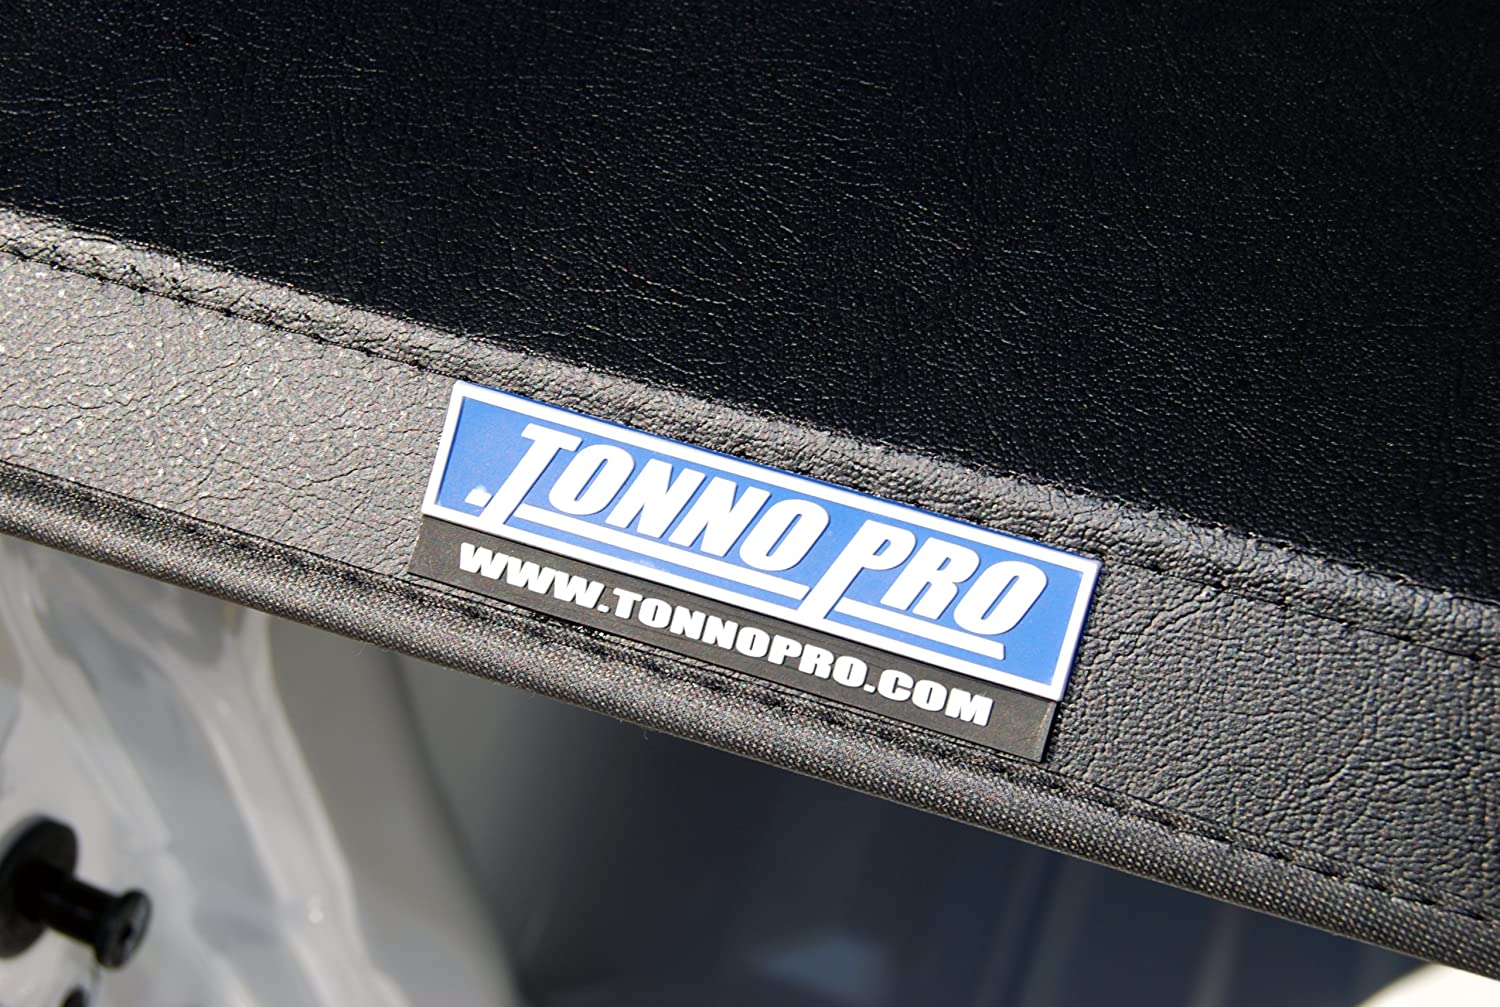 Tonno Pro Tonno Fold, Soft Folding Truck Bed Tonneau Cover | 42-501 | Fits 2005-2015 Toyota Tacoma 5' Bed (60.3") - $130